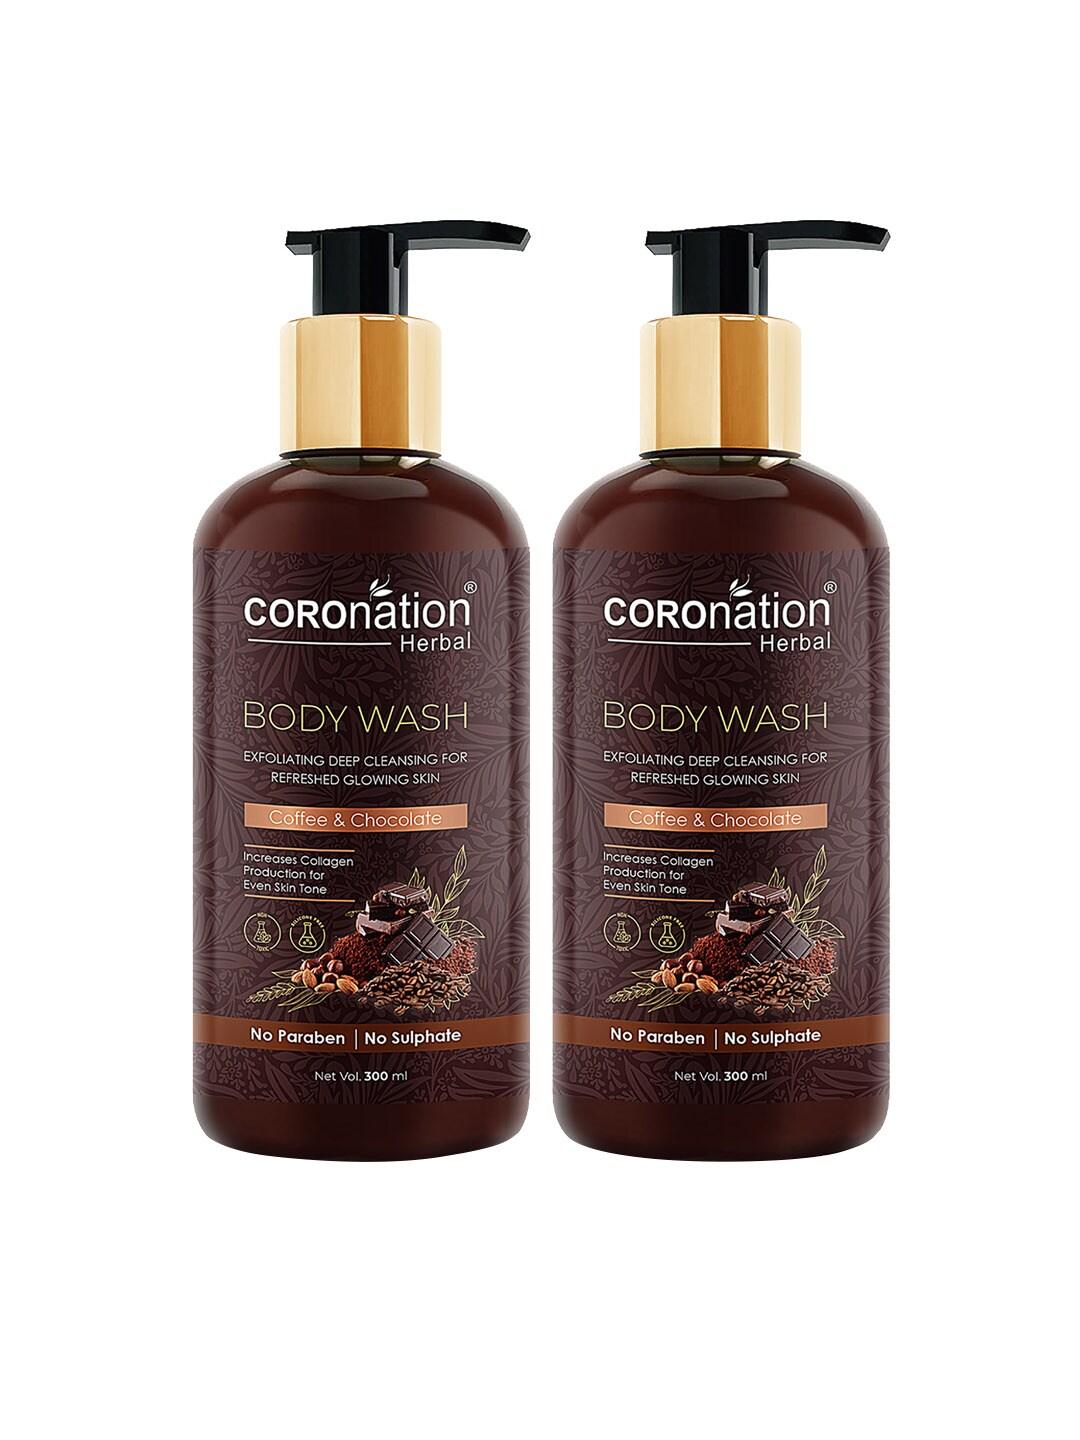 COROnation Herbal Set of 2 Coffee and Chocolate Body Wash 300 ml Each